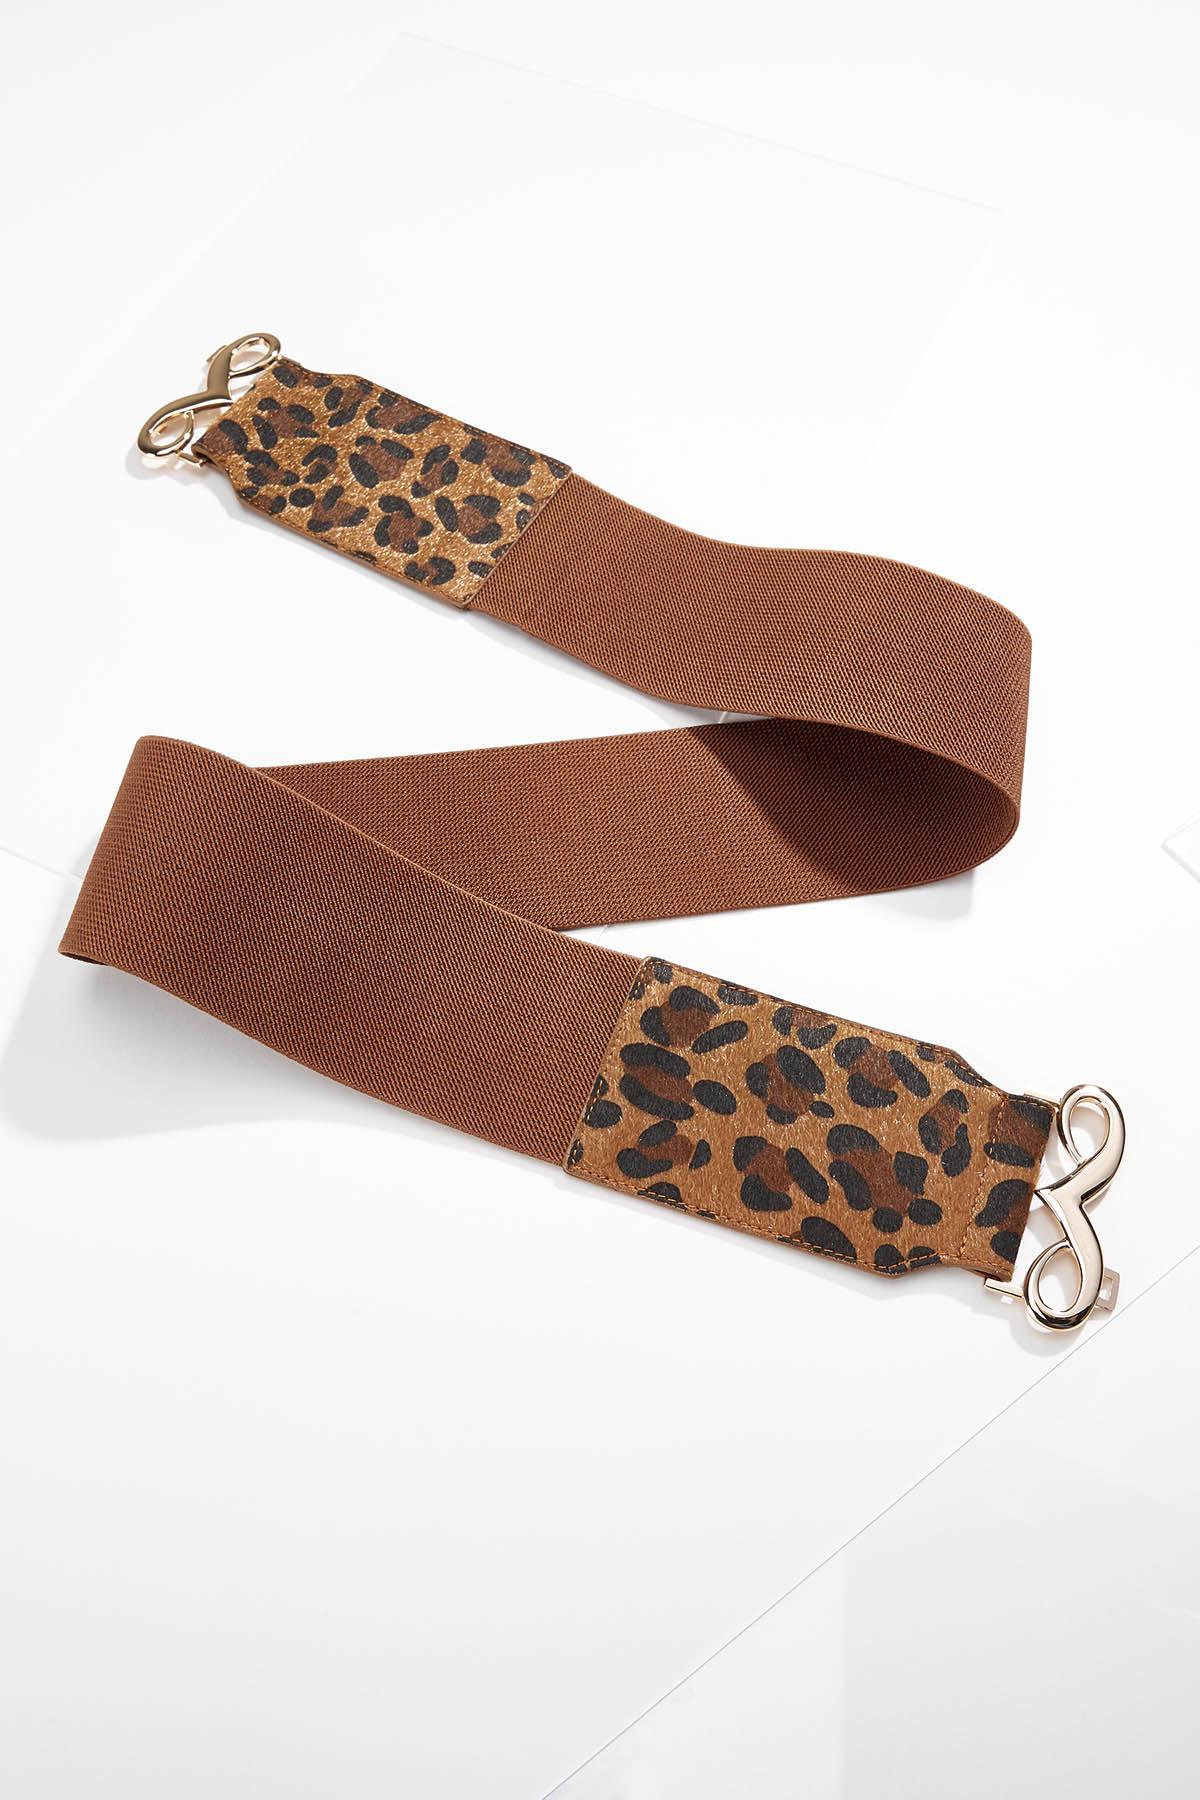 Plus Size Leopard Fur Stretch Belt